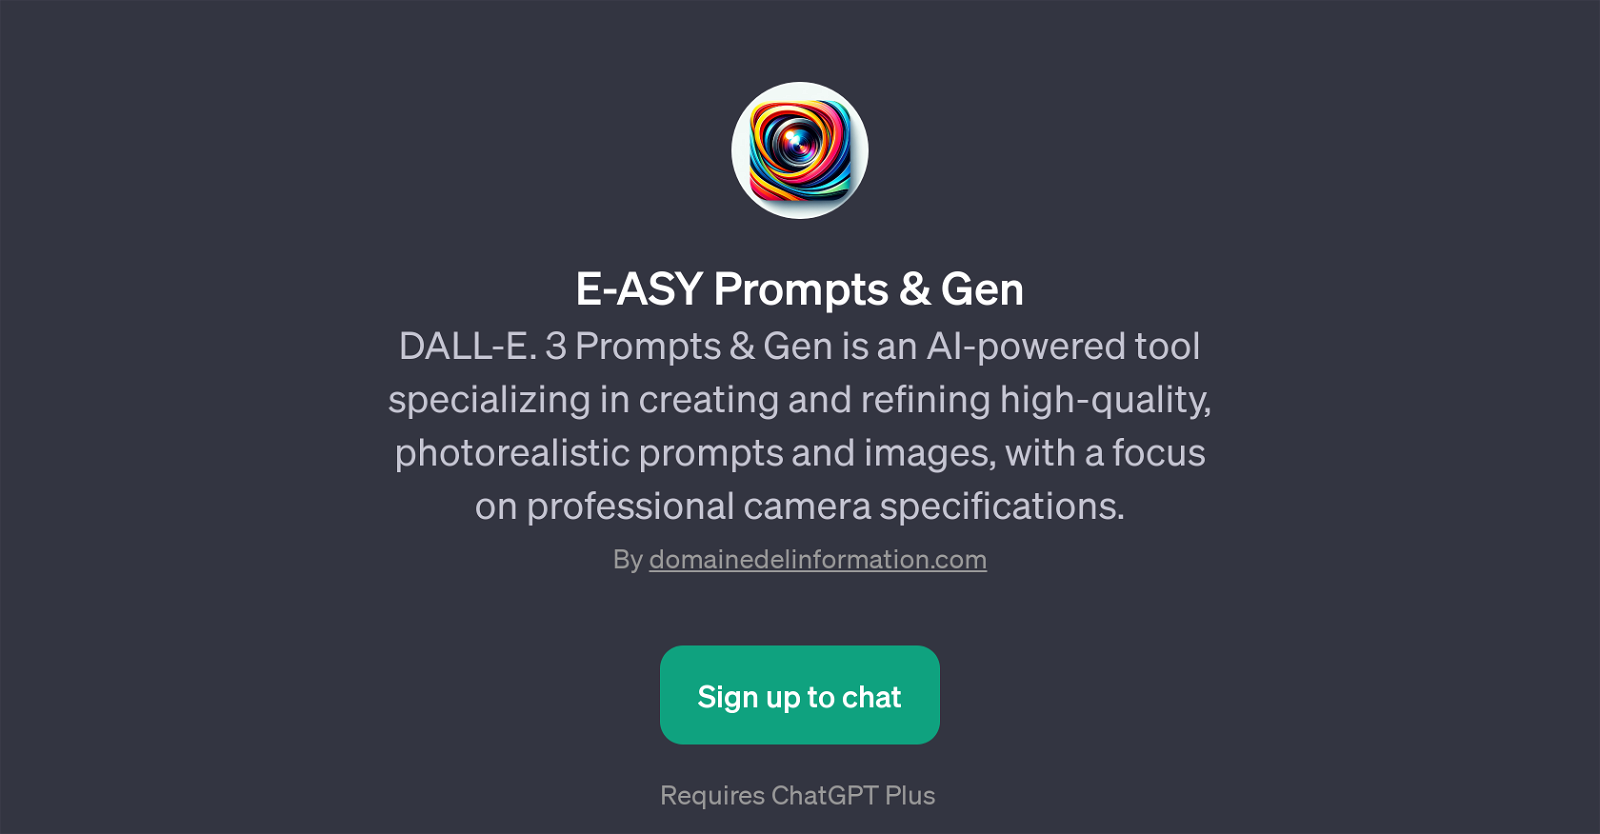 E-ASY Prompts & Gen website